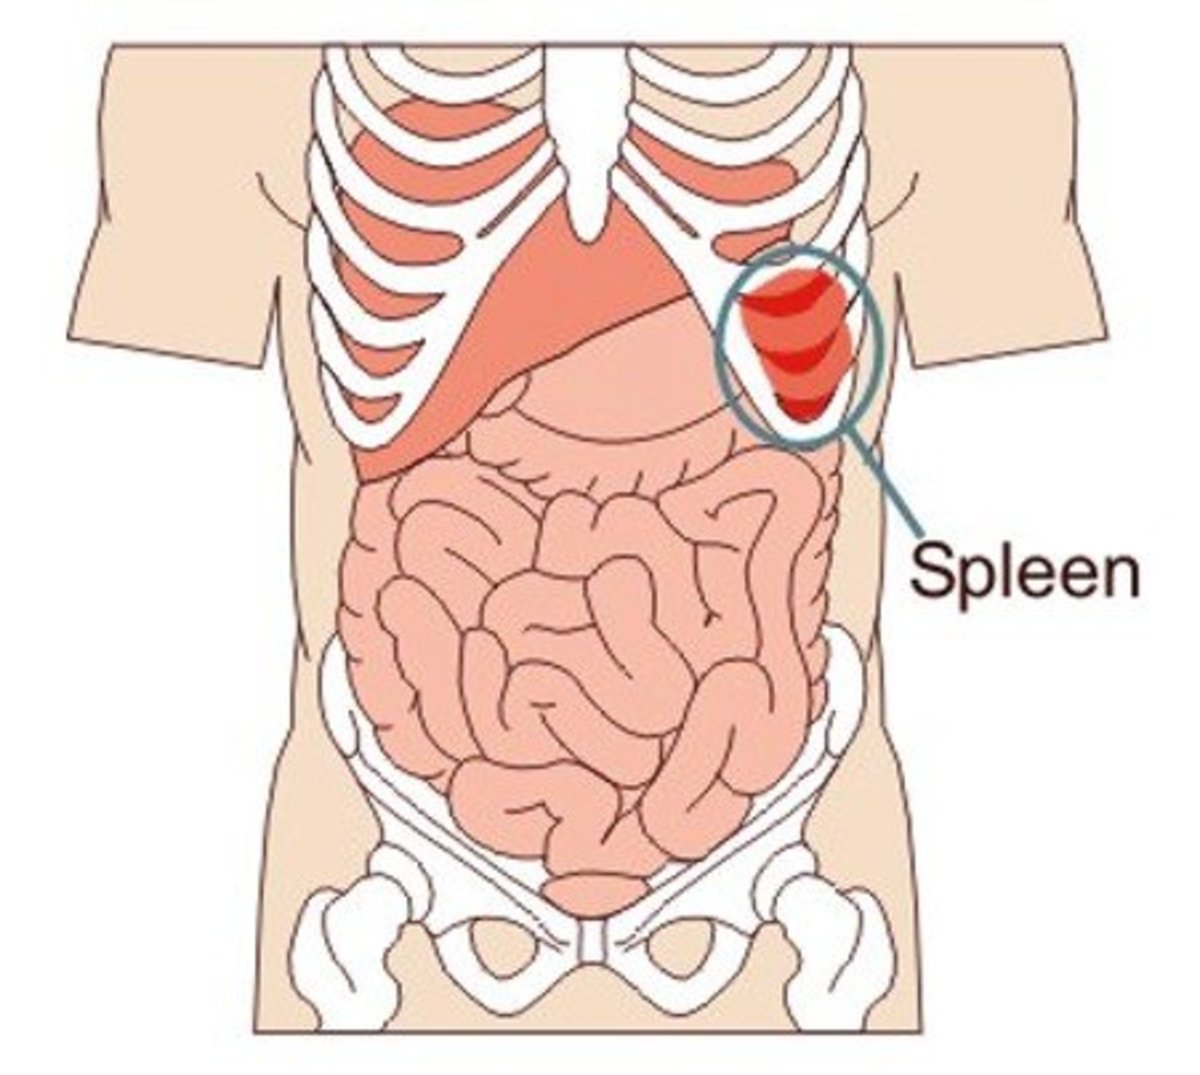 Spleen Pain - Location, Symptoms, Causes, Treatment